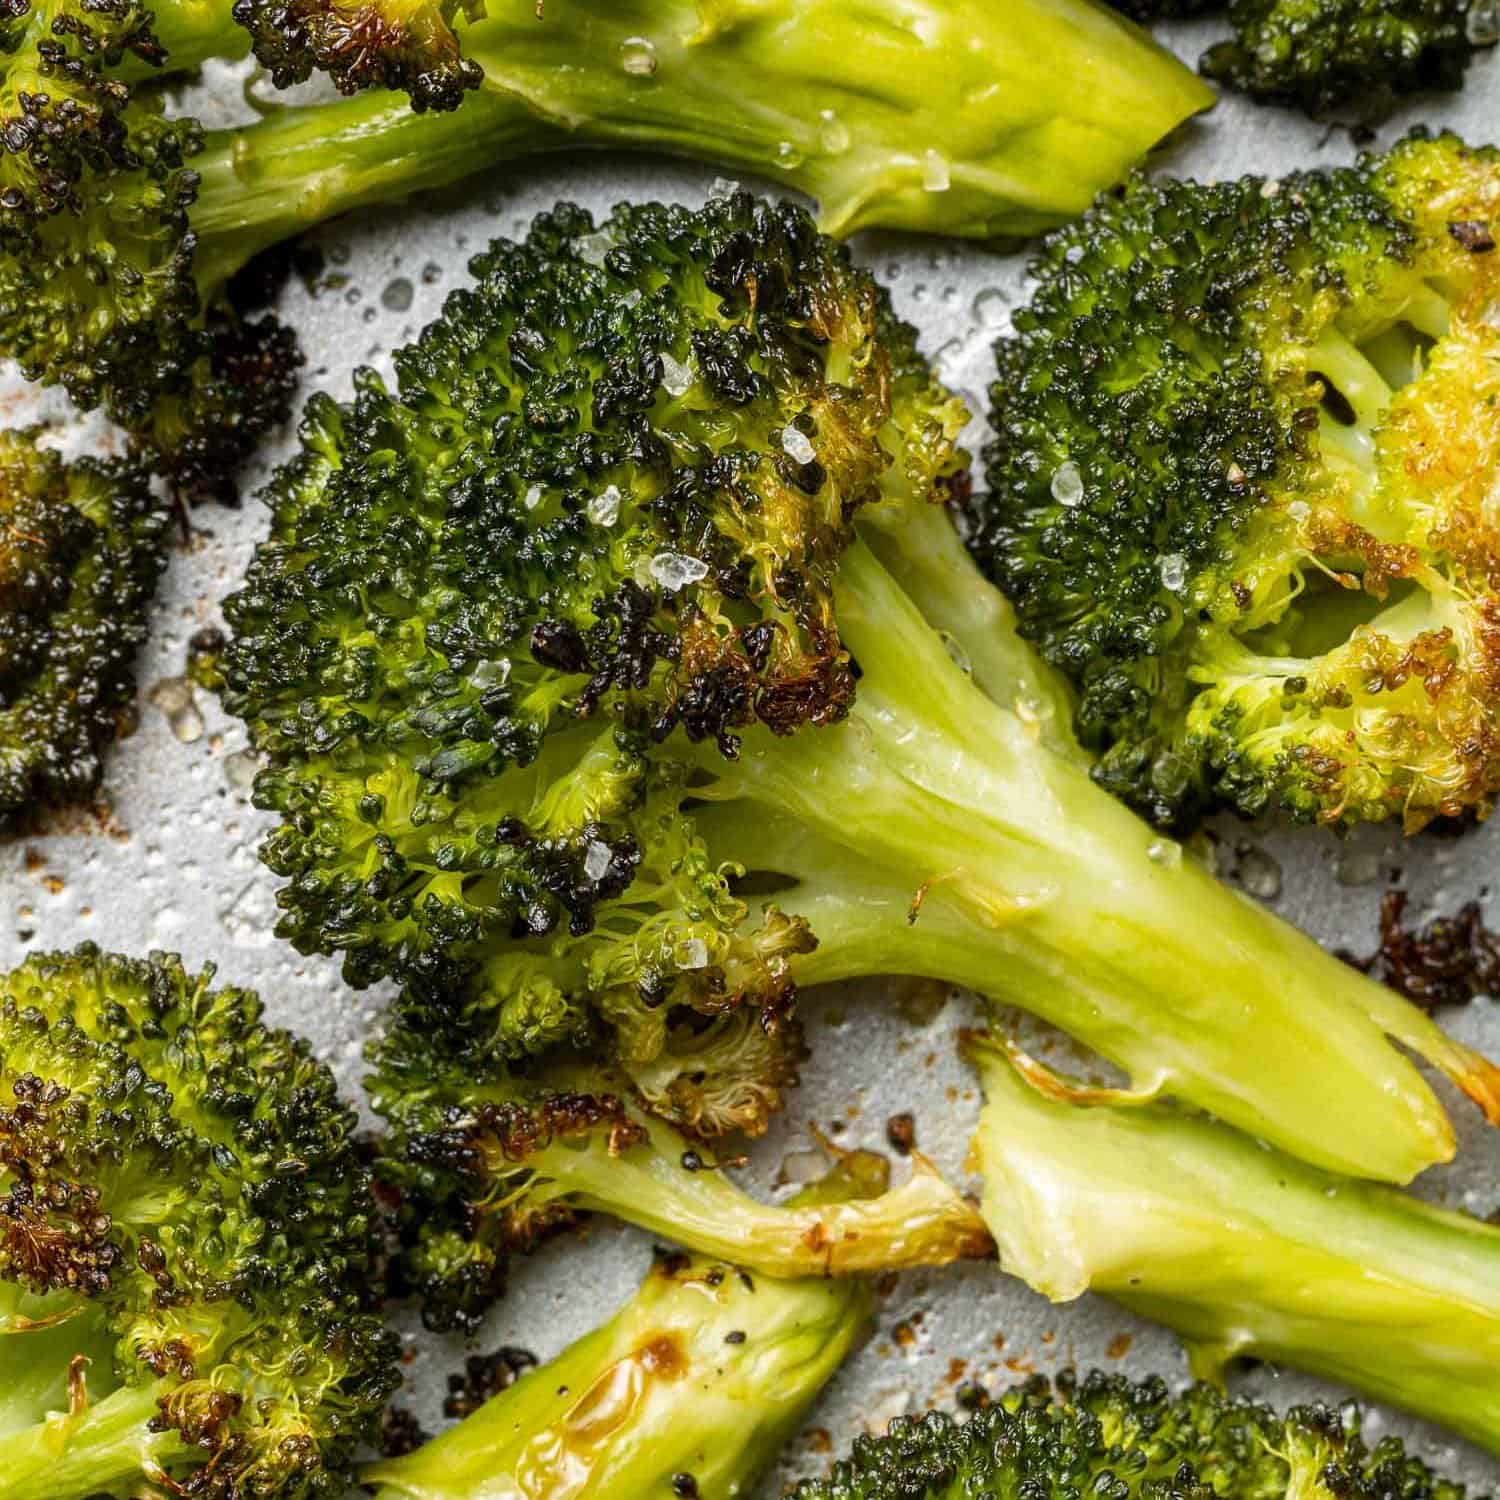 https://www.rachelcooks.com/wp-content/uploads/2021/10/roasted-broccoli-web-5-square.jpg